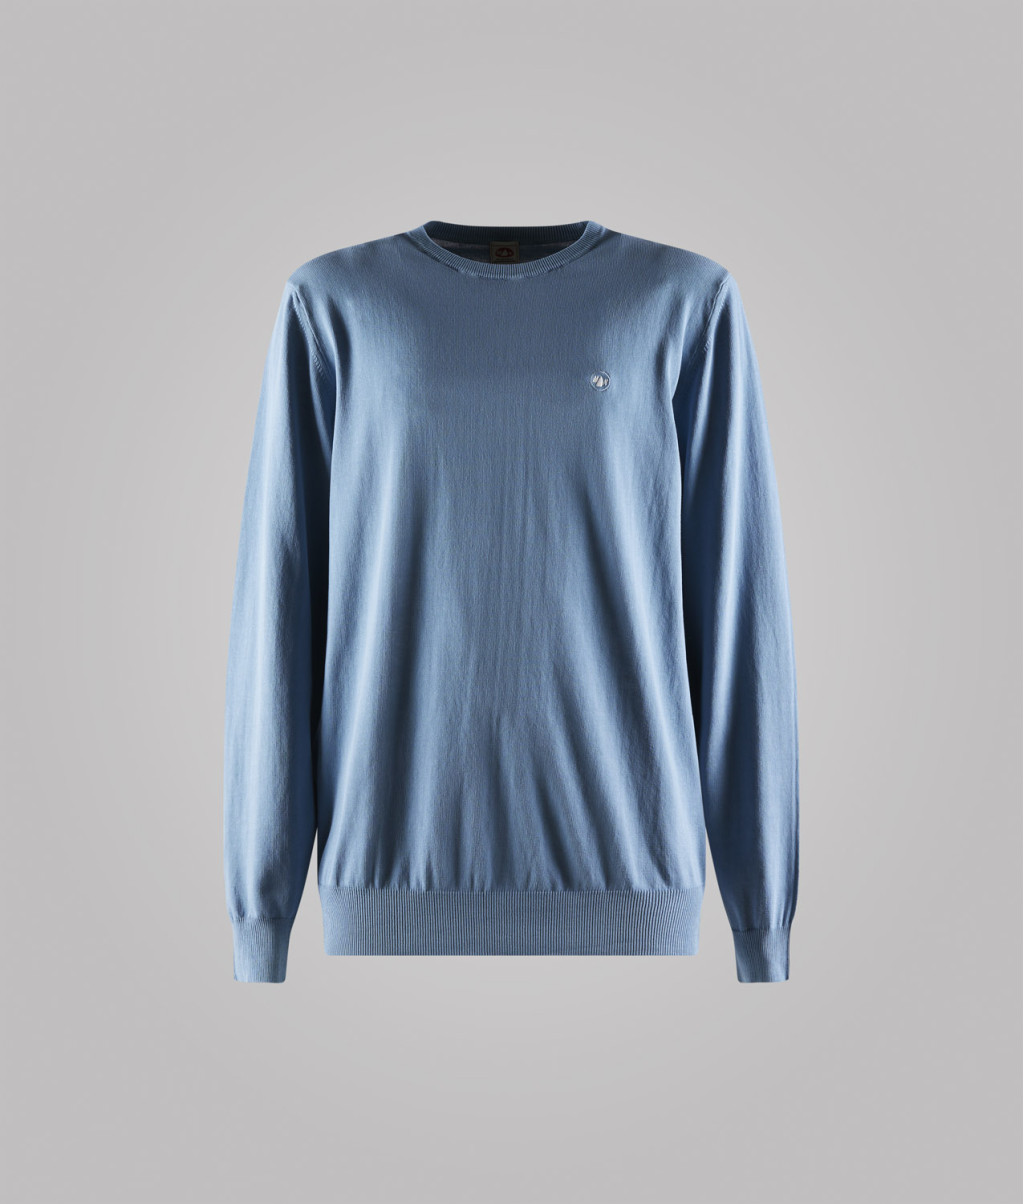 Men's Louis Vuitton Jumper Pullover Sweater Beige Crewneck